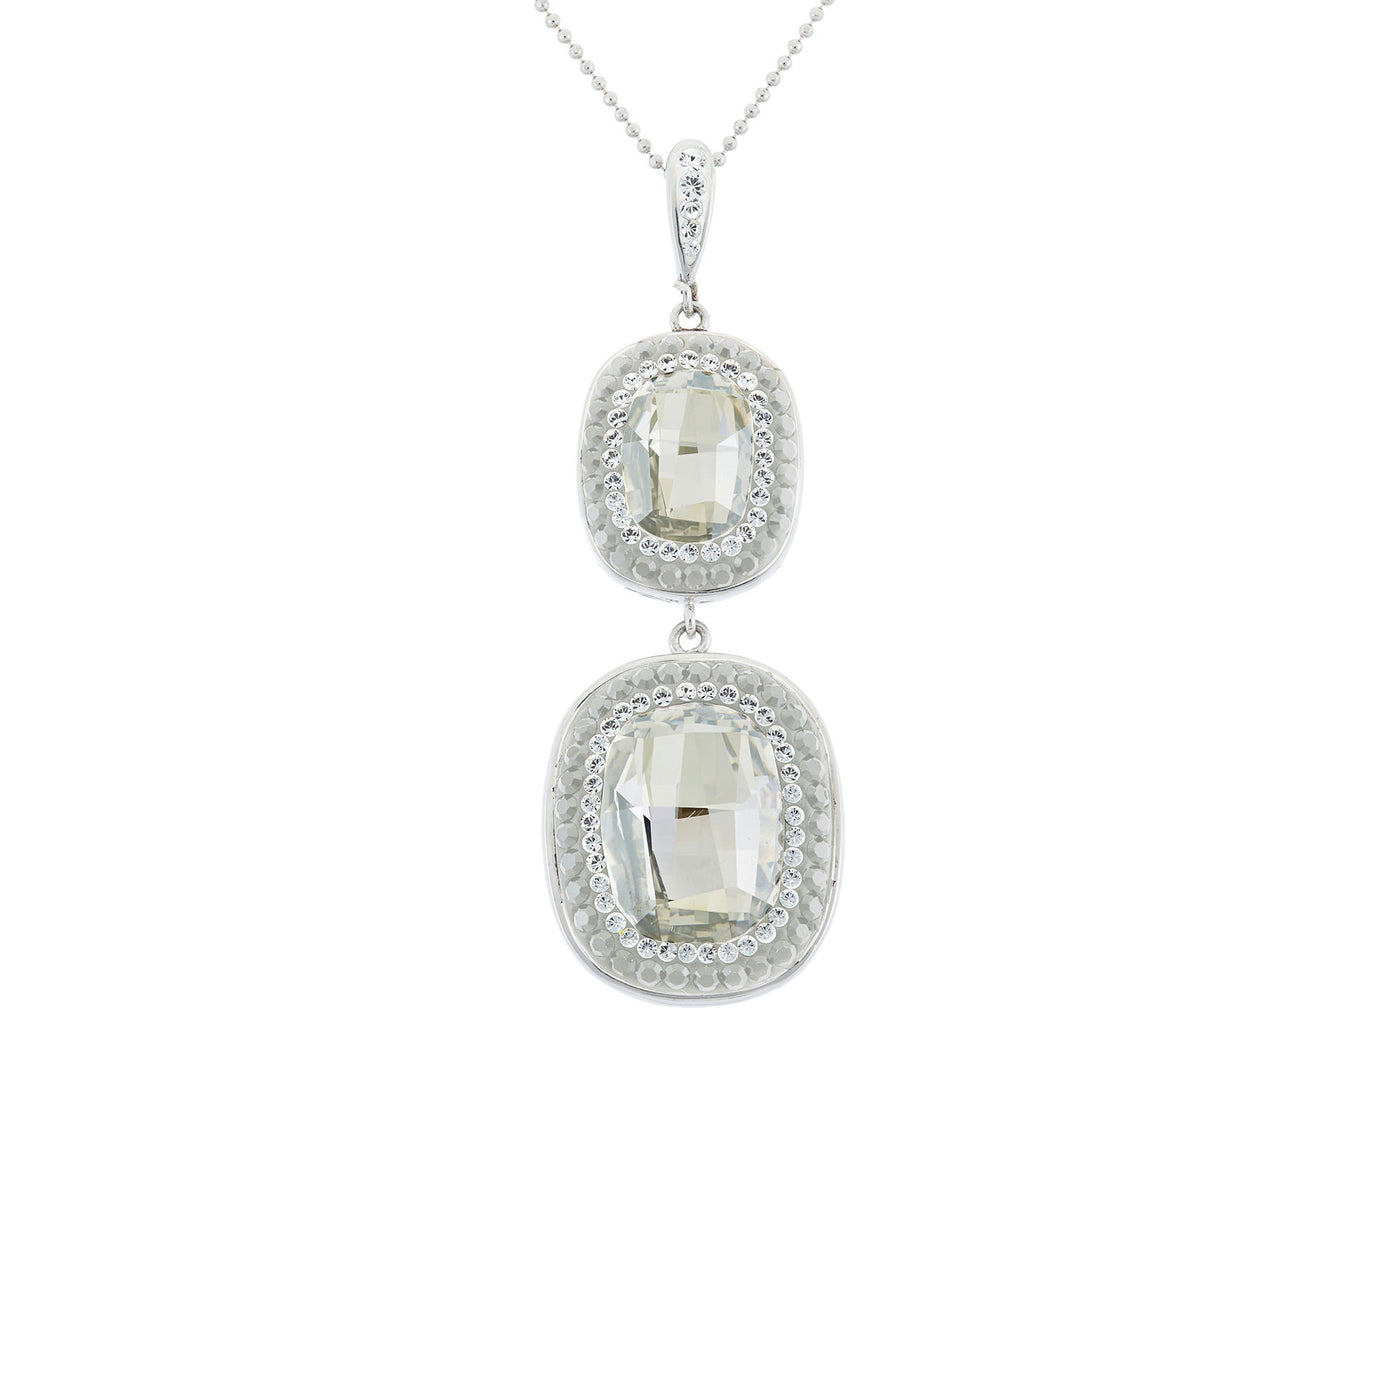 Rebecca Sloane Silver Multi Round Crystal With White Pave Pendant